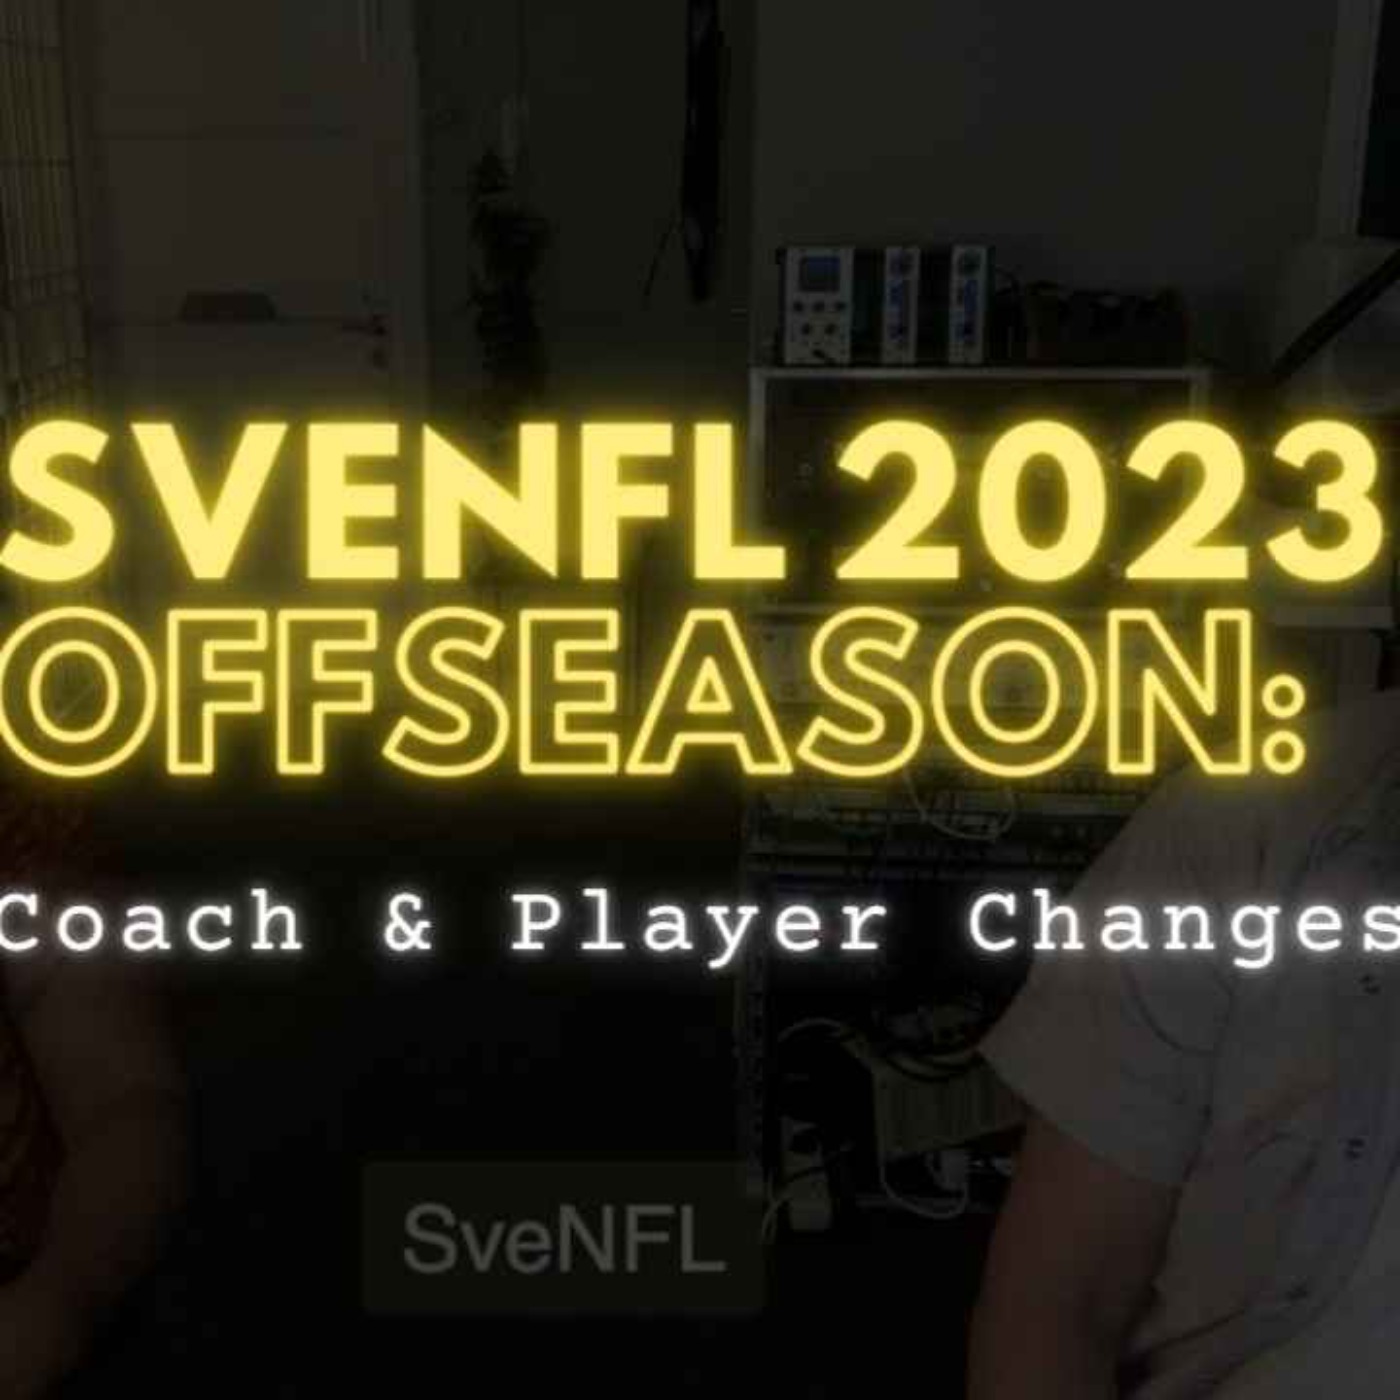 SveNFL 2022 Offseason Update: Coach & Player Changes